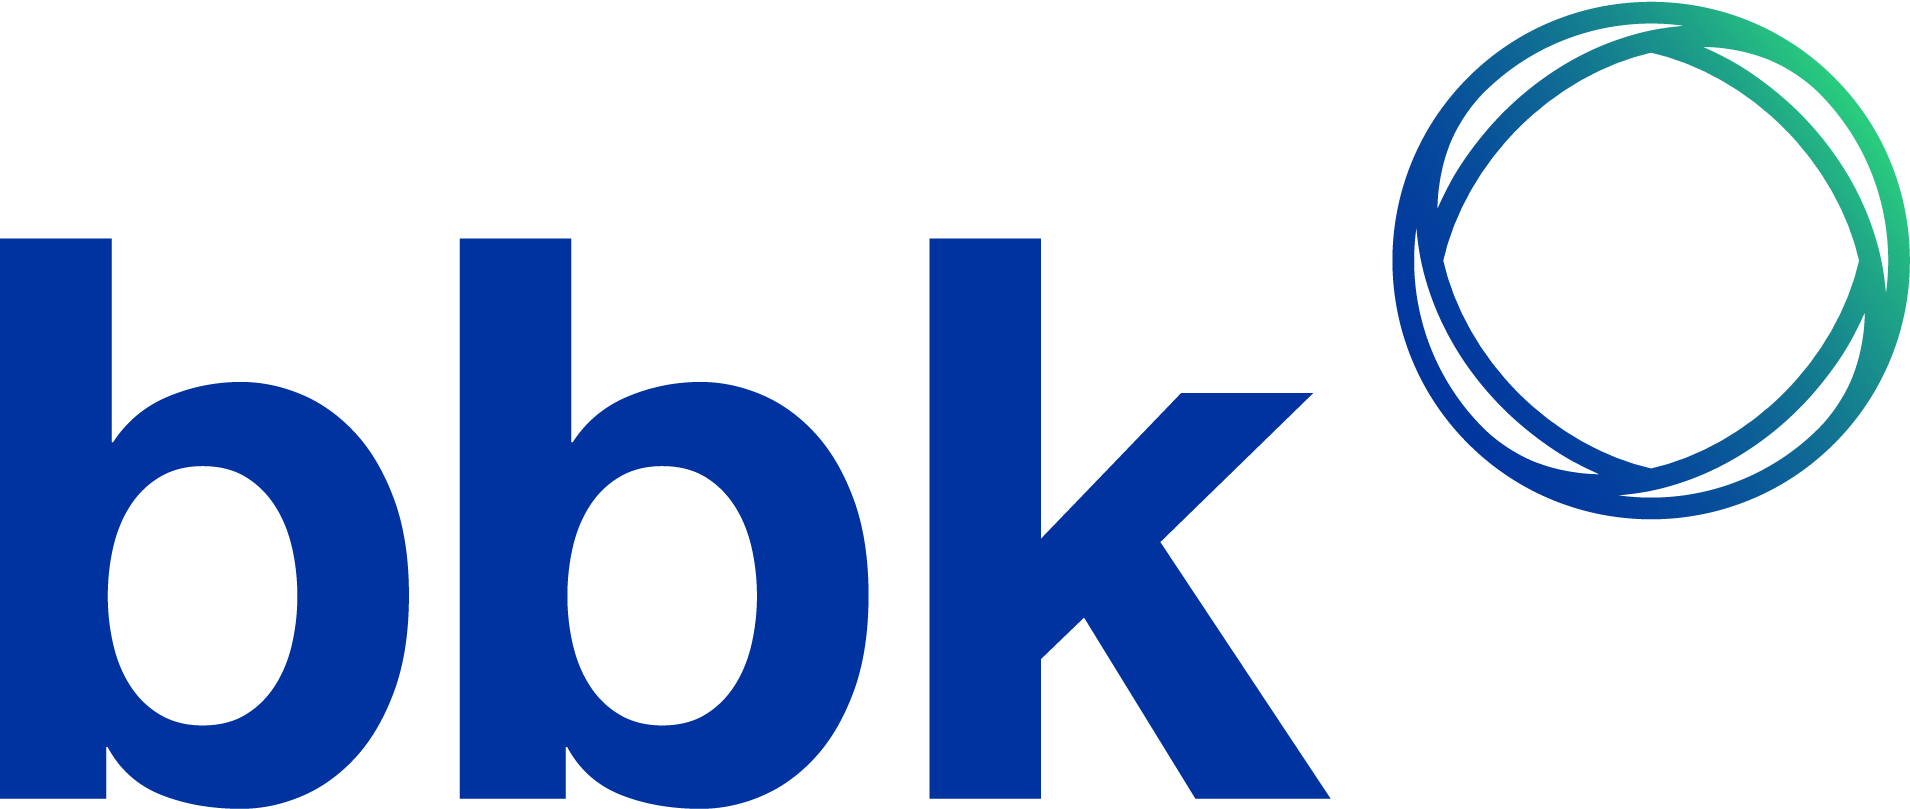 BBK Logo - BBK Worldwide | Home